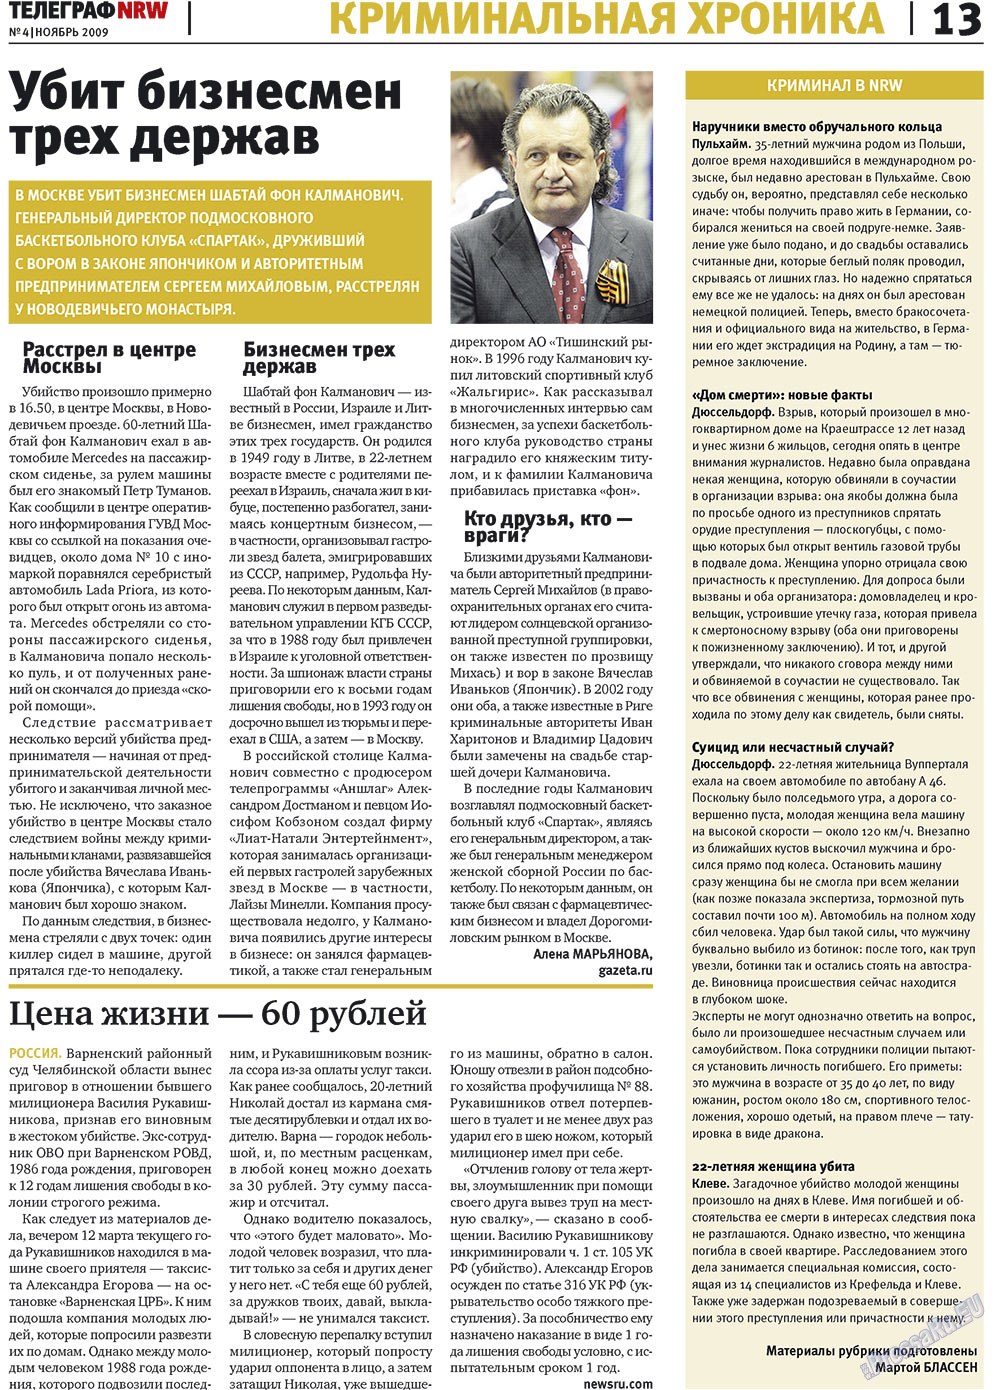 Телеграф NRW, газета. 2009 №4 стр.13